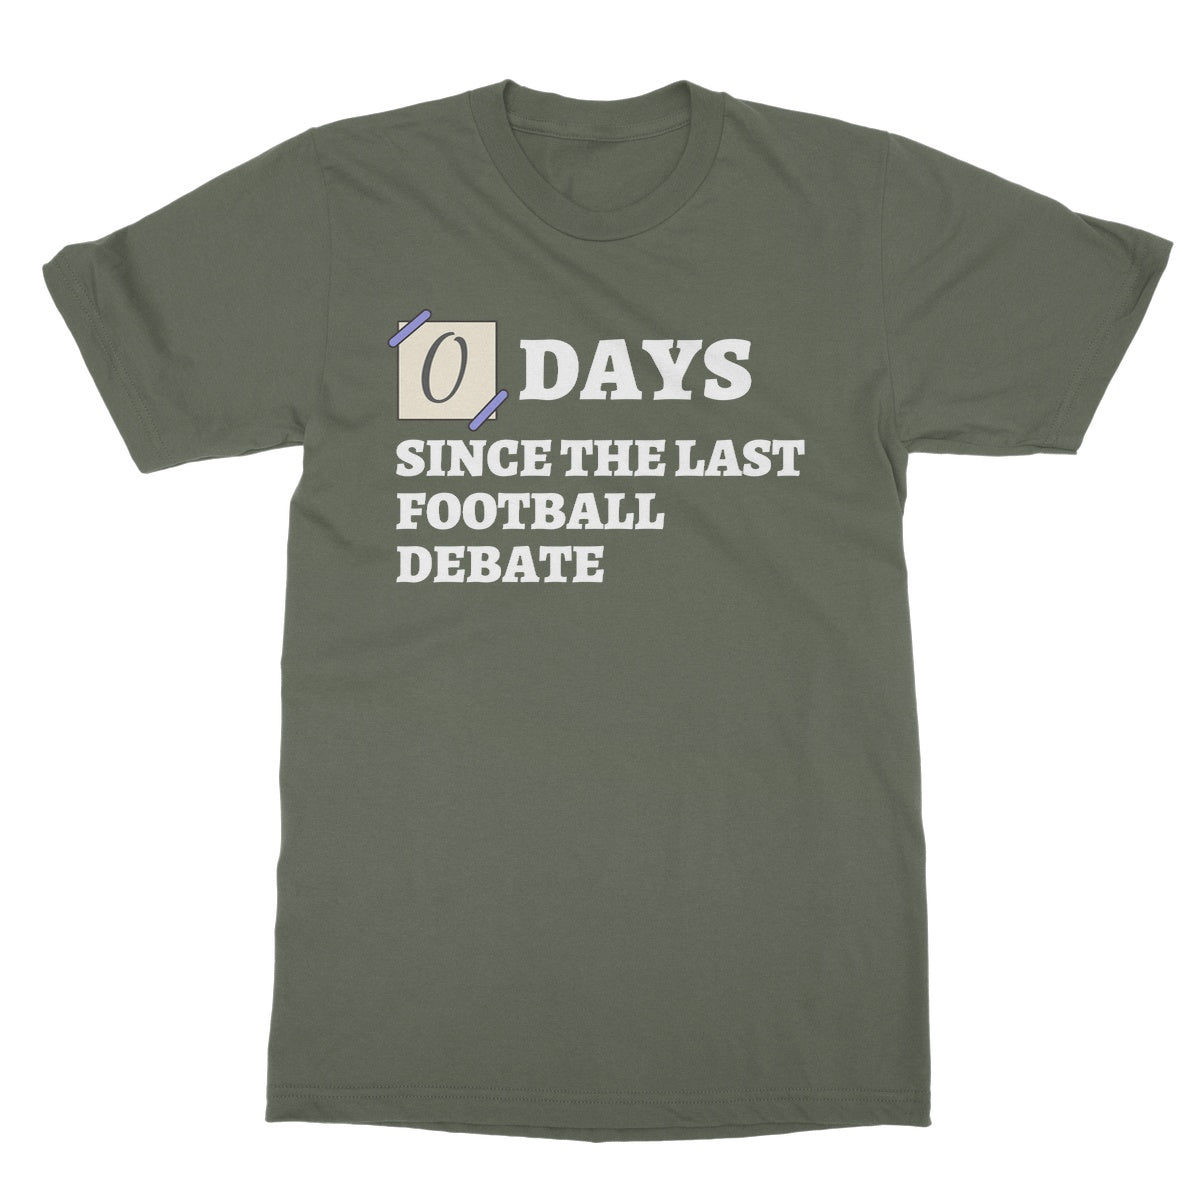 0 days since the last football debate t shirt green